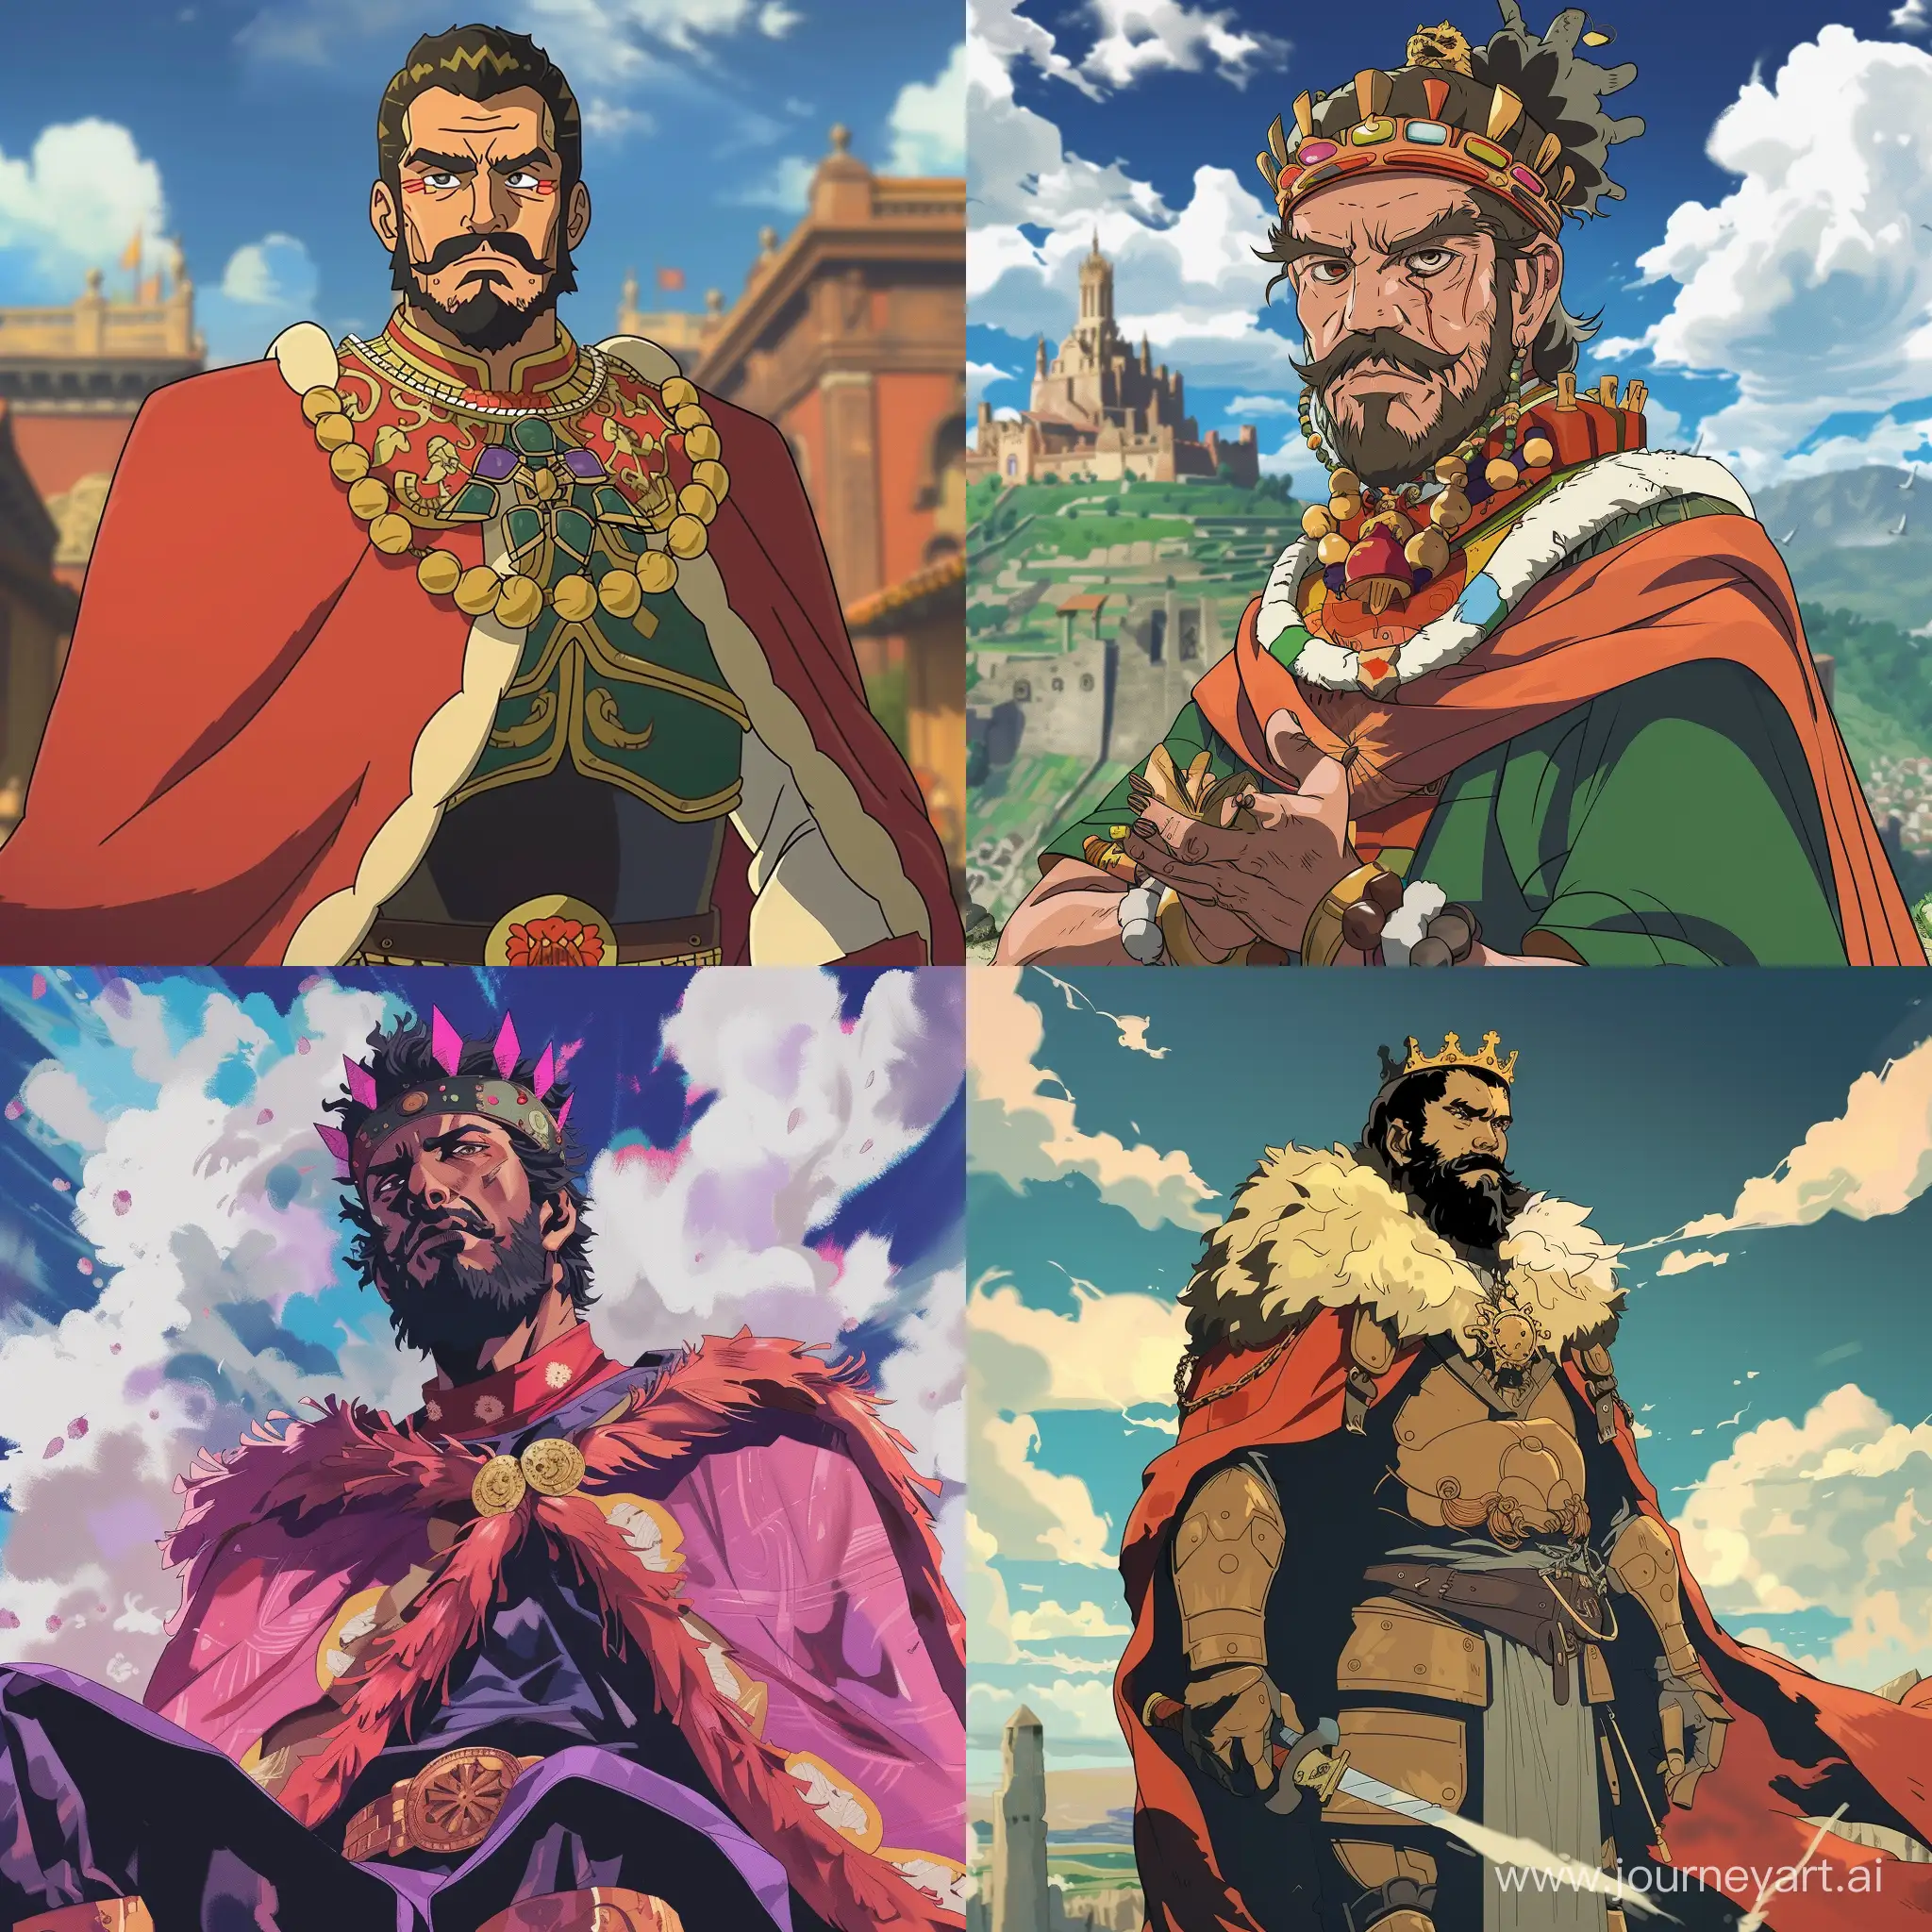 Barragan-the-King-of-Hueco-Mundo-Captured-in-Ghibli-Anime-Studio-Style